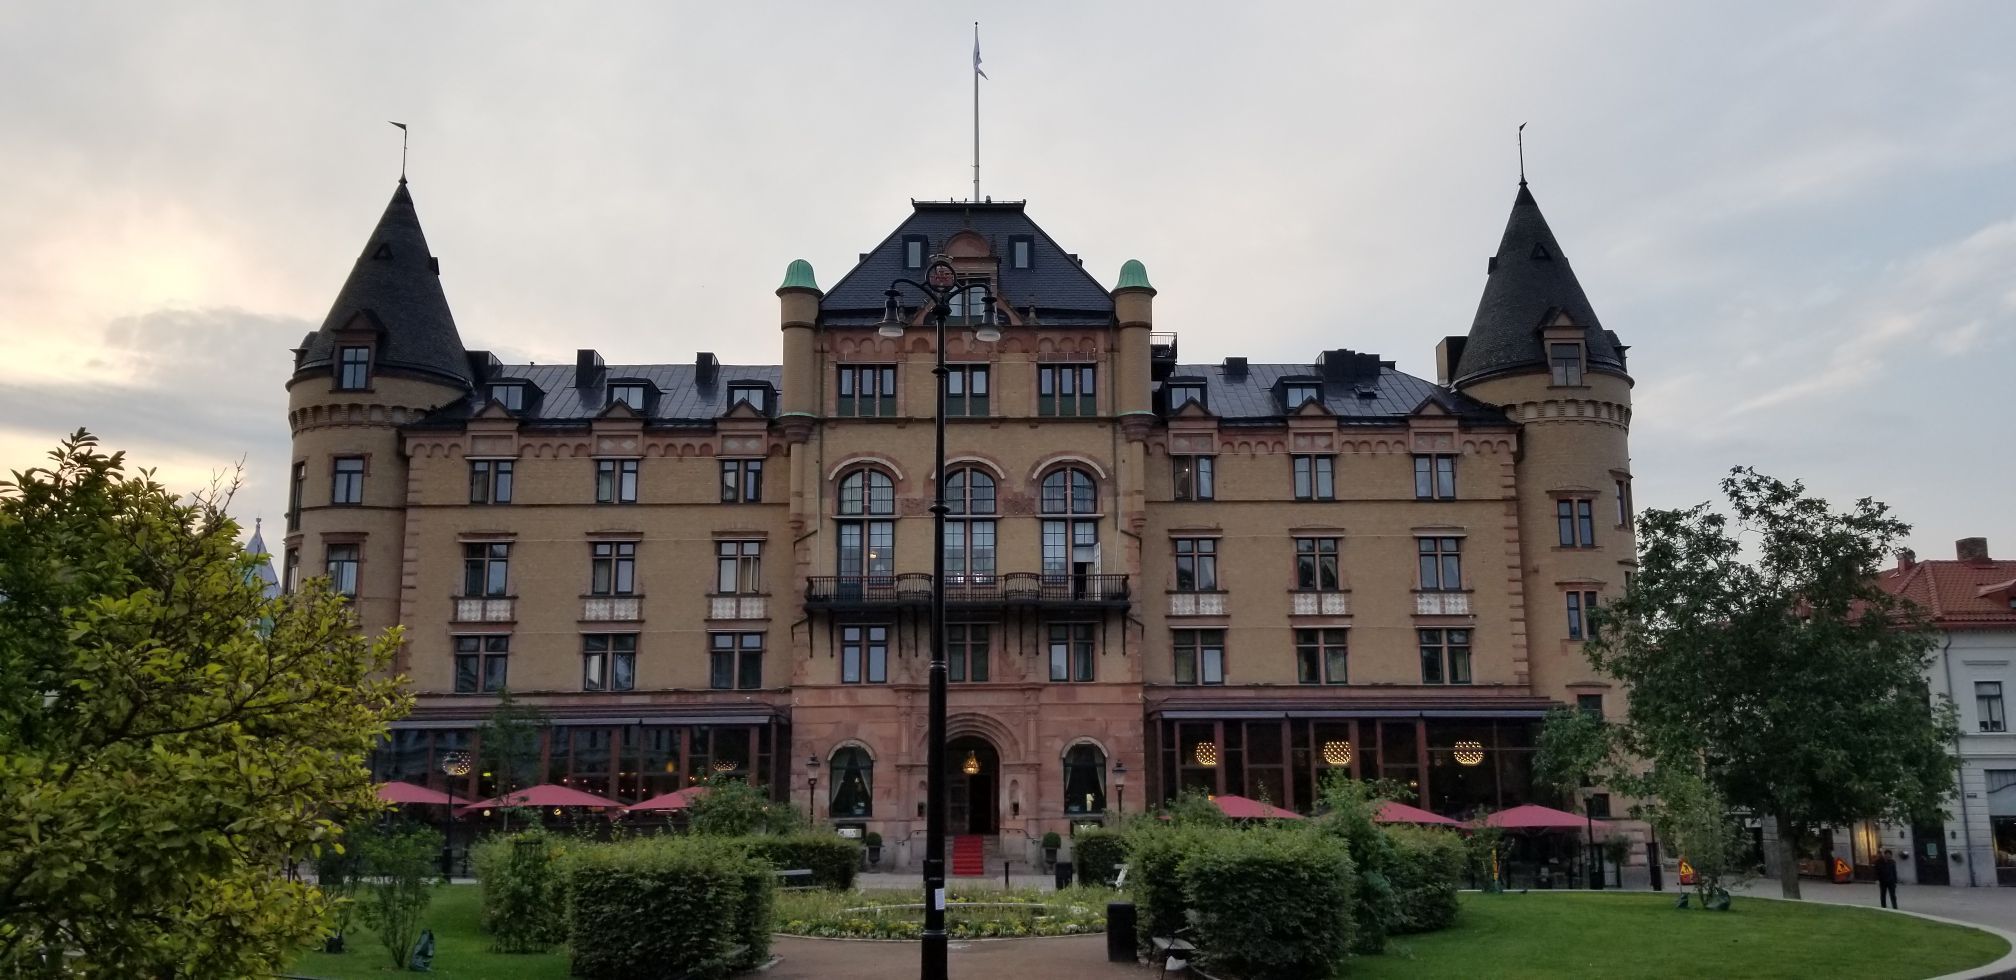 Grand Hotel Lund是这里最古老的酒店之一了。酒店装修很传统，细节做的也不错。早餐是典型